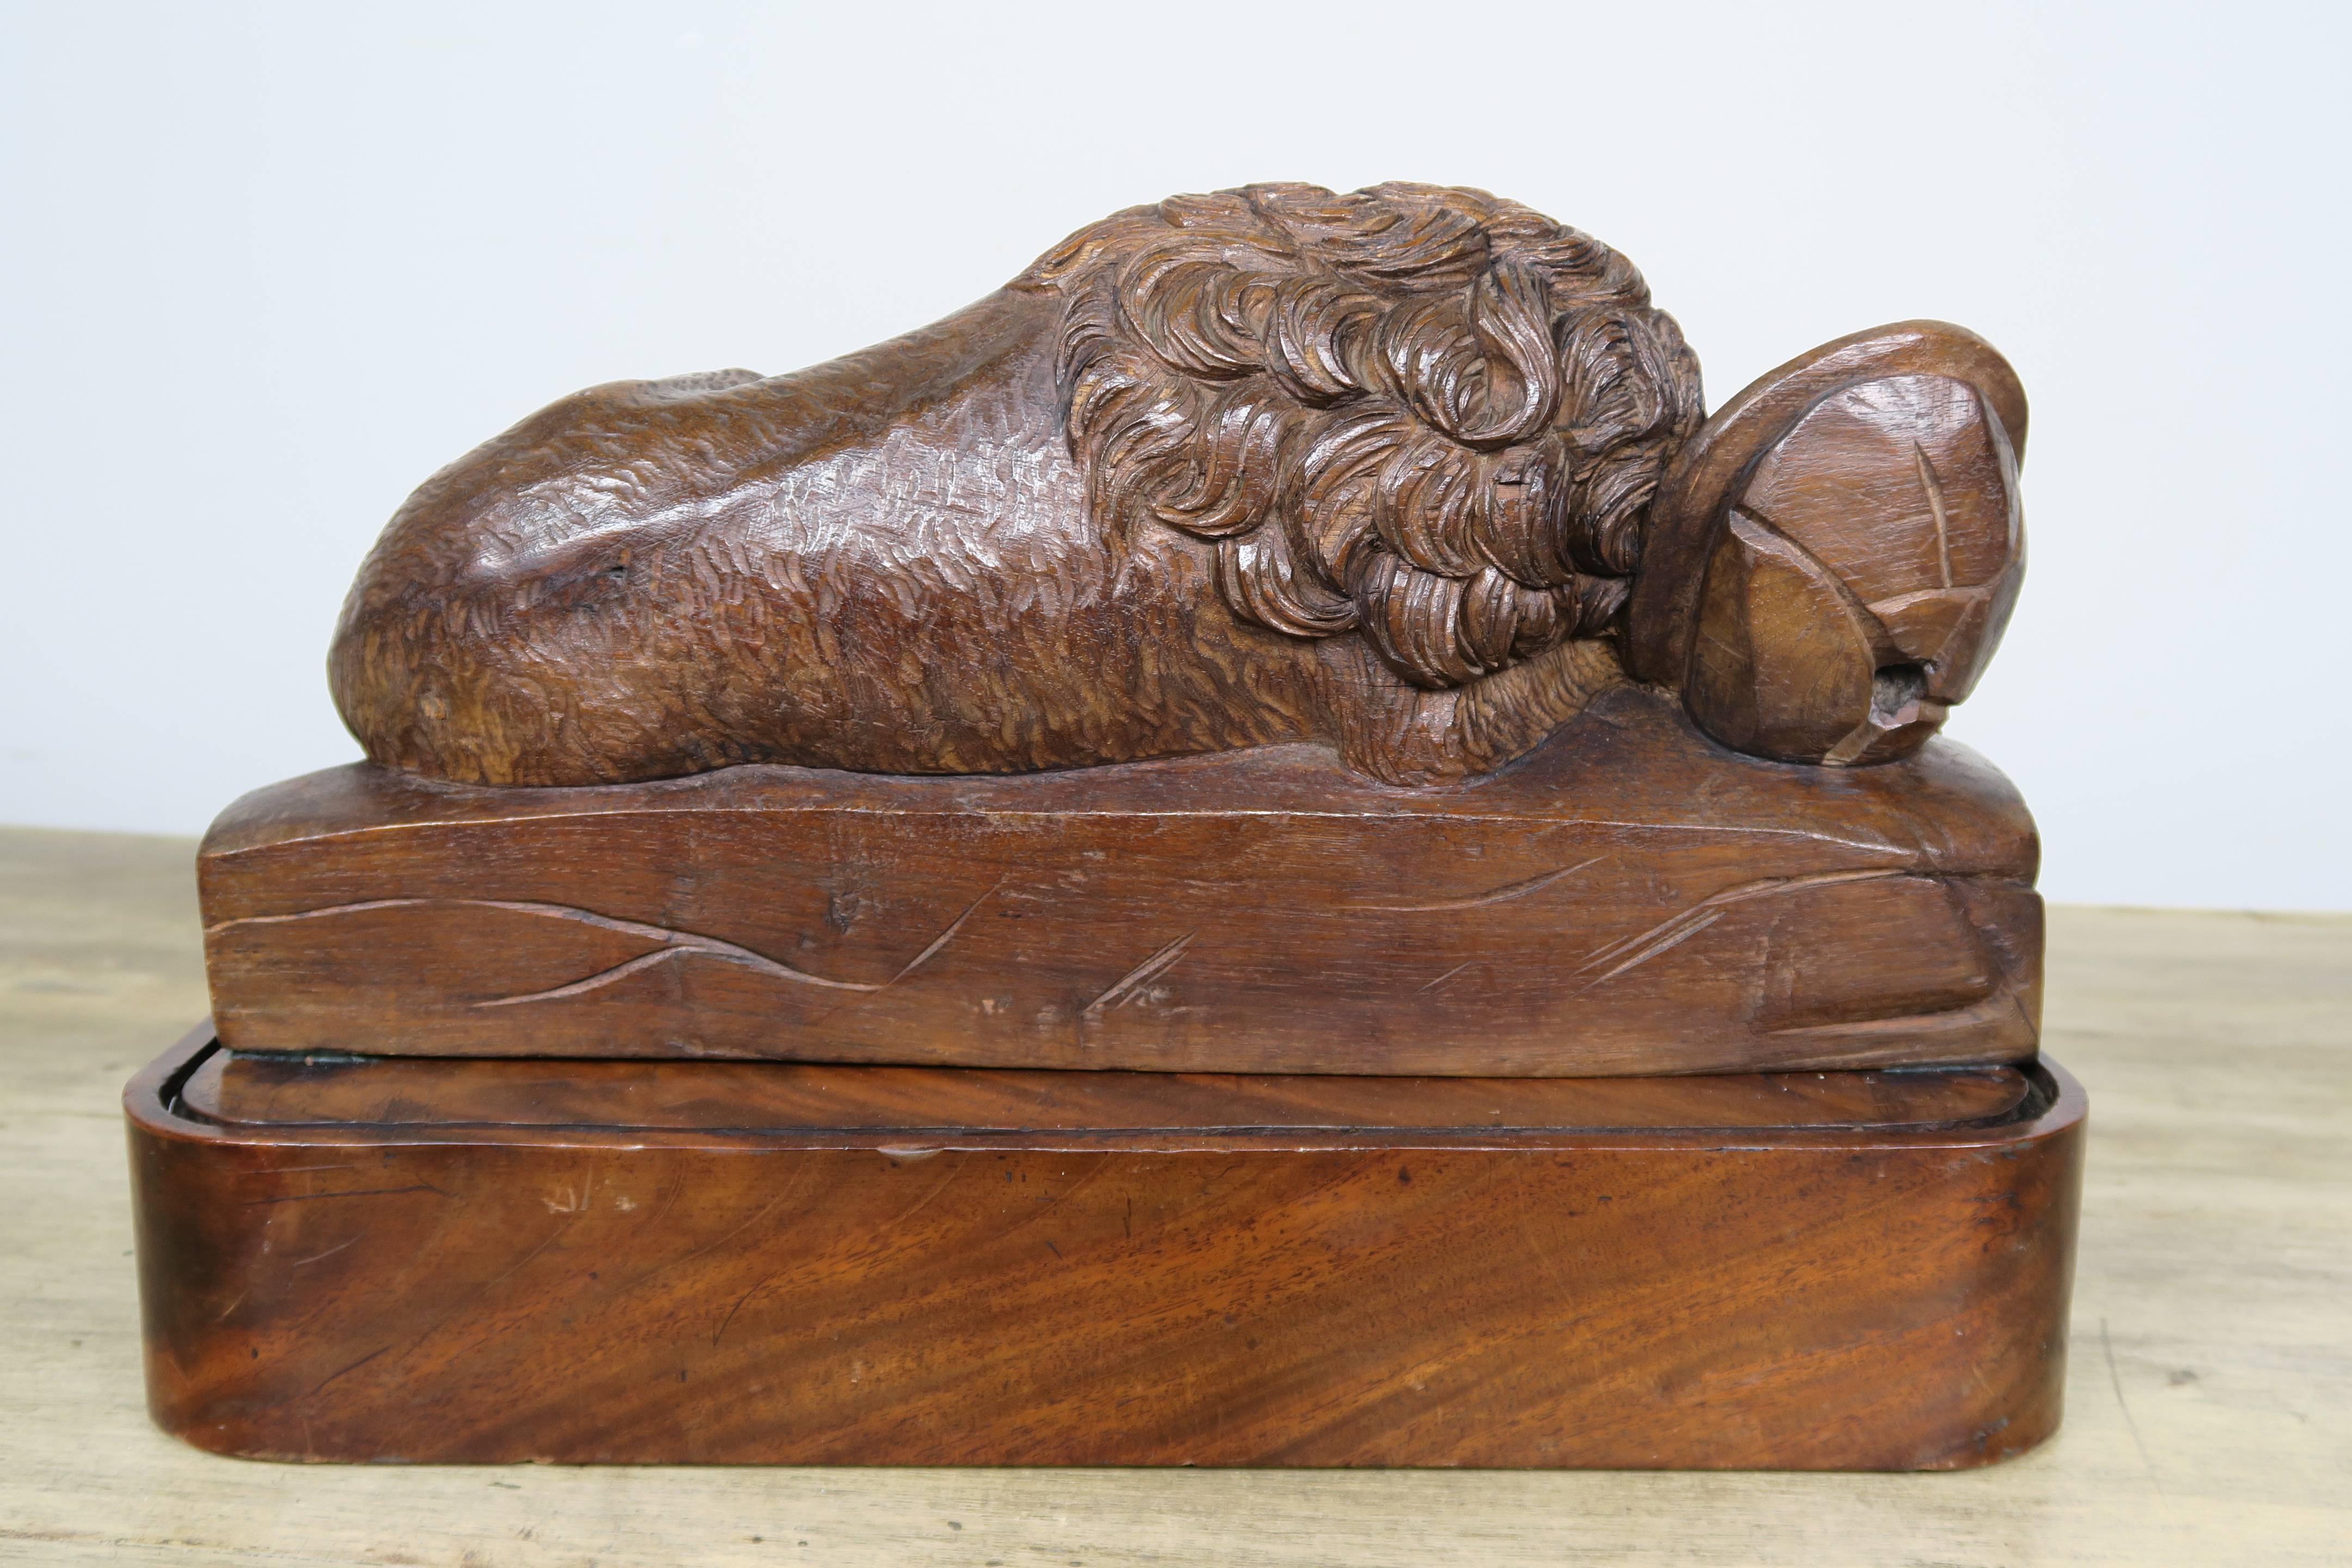 Hand-Carved Carved Wood Lion-Copy of Original Monument in Lucerne